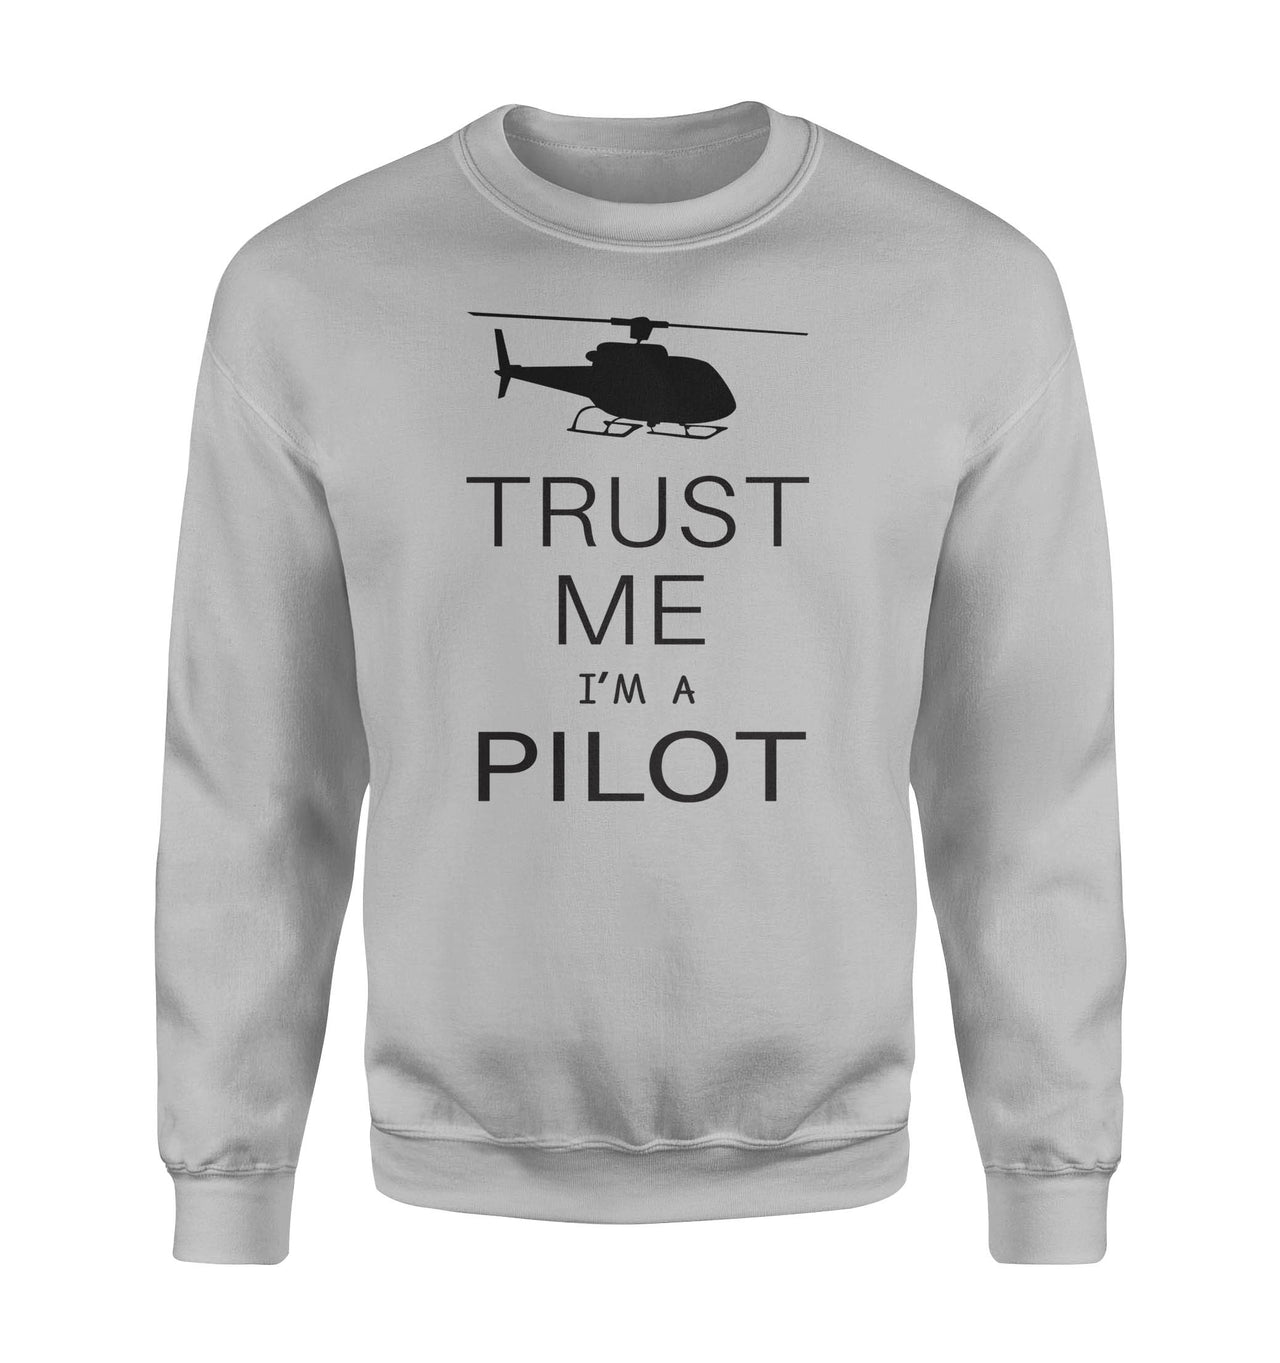 Trust Me I'm a Pilot (Helicopter) Designed Sweatshirts